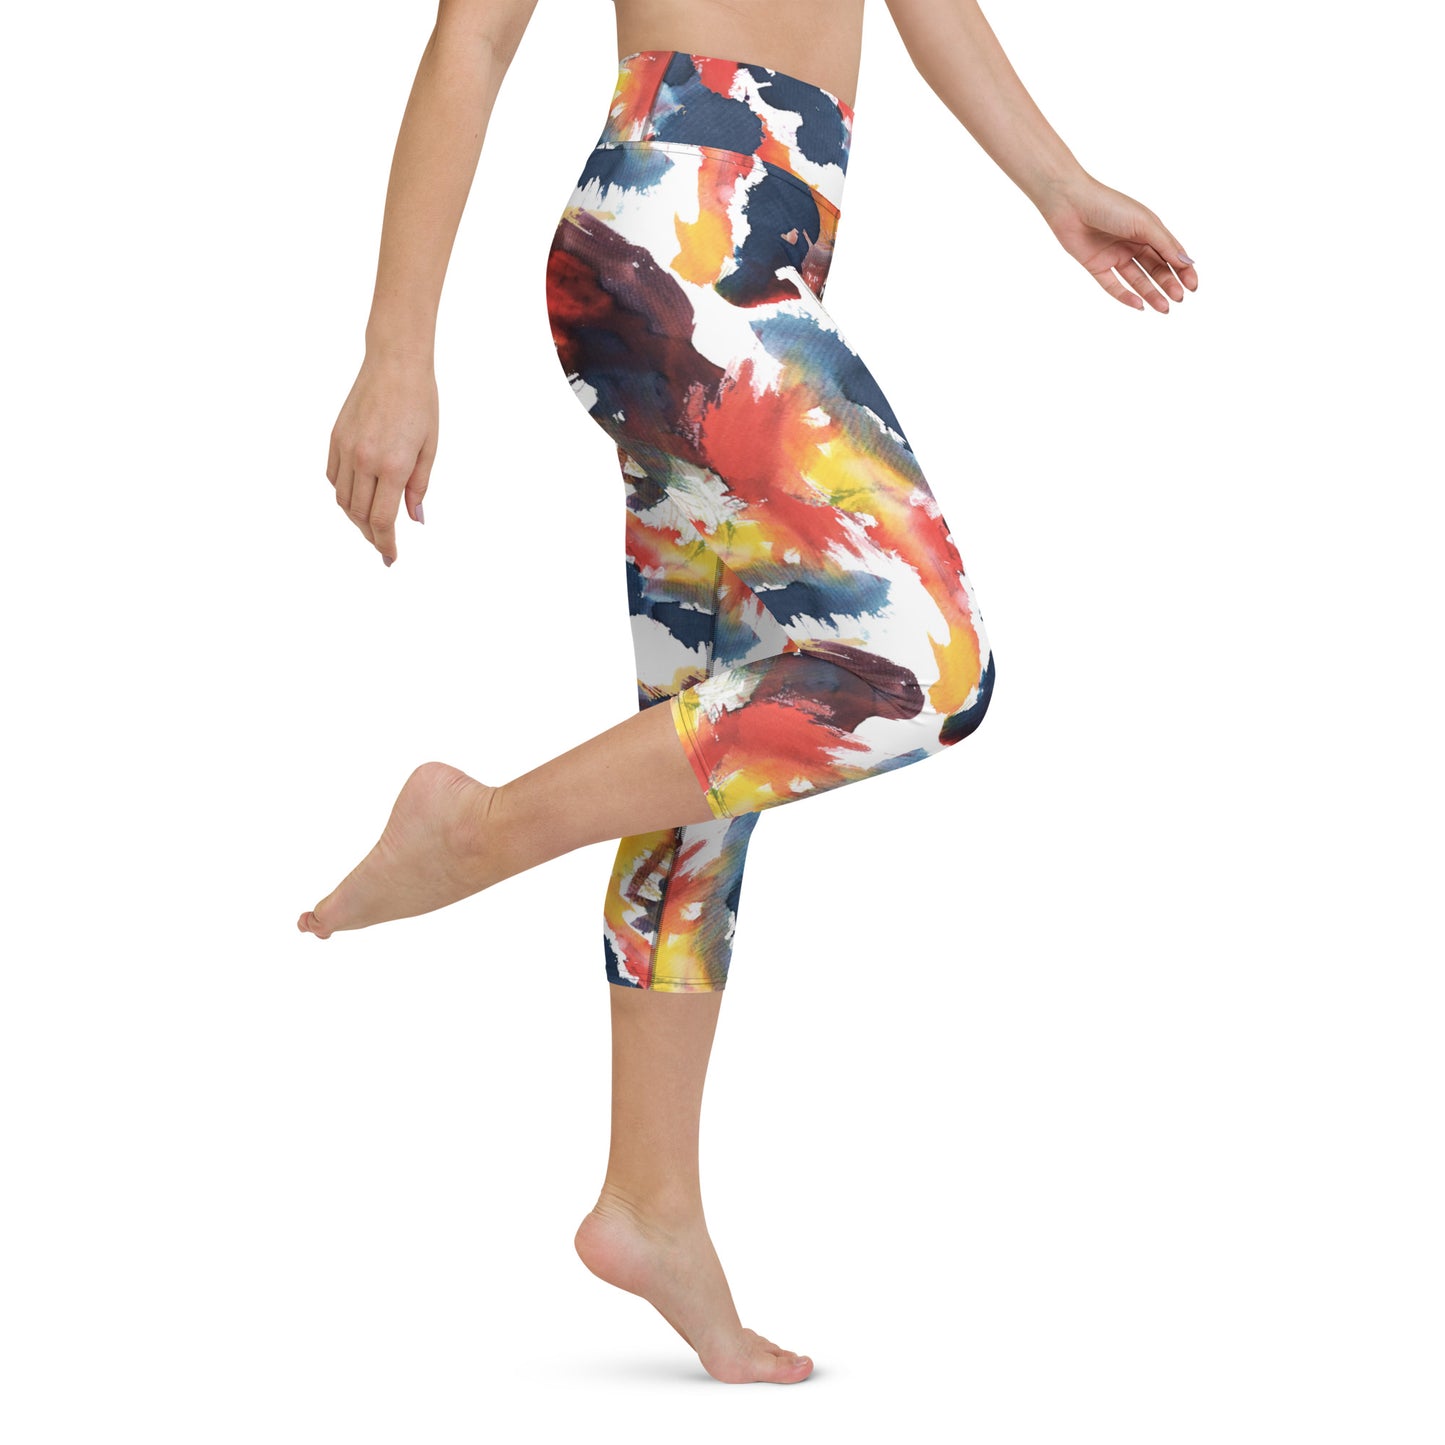 Colorful High-Waisted Yoga Capri Leggings